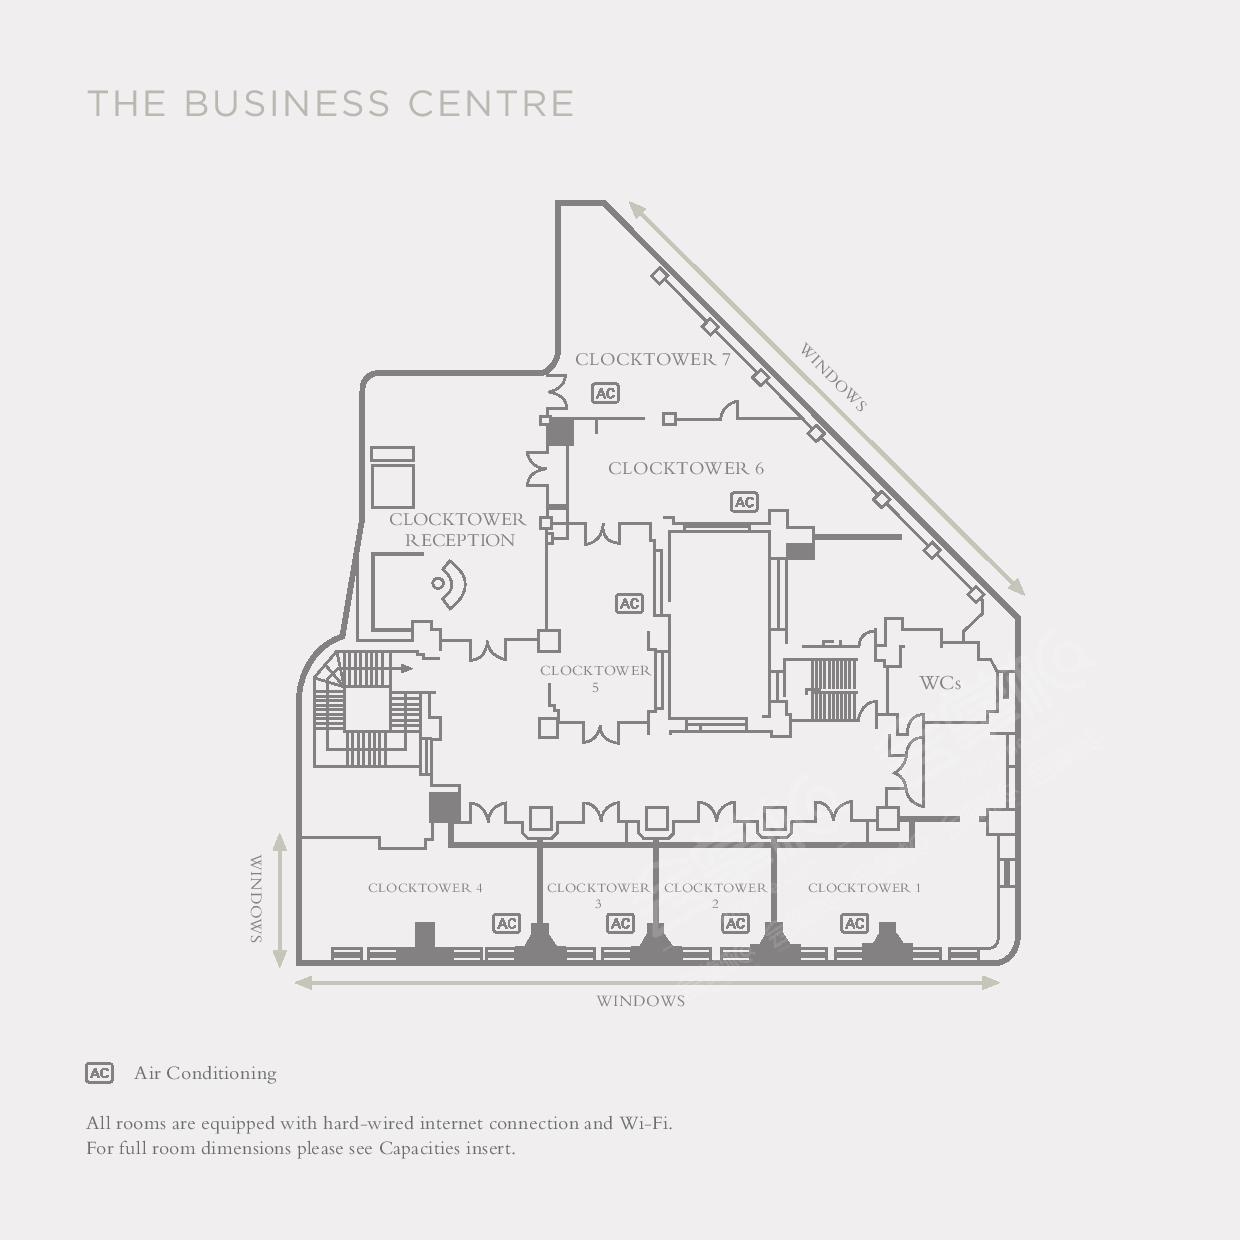 Busines Centre-Clocktower Rms